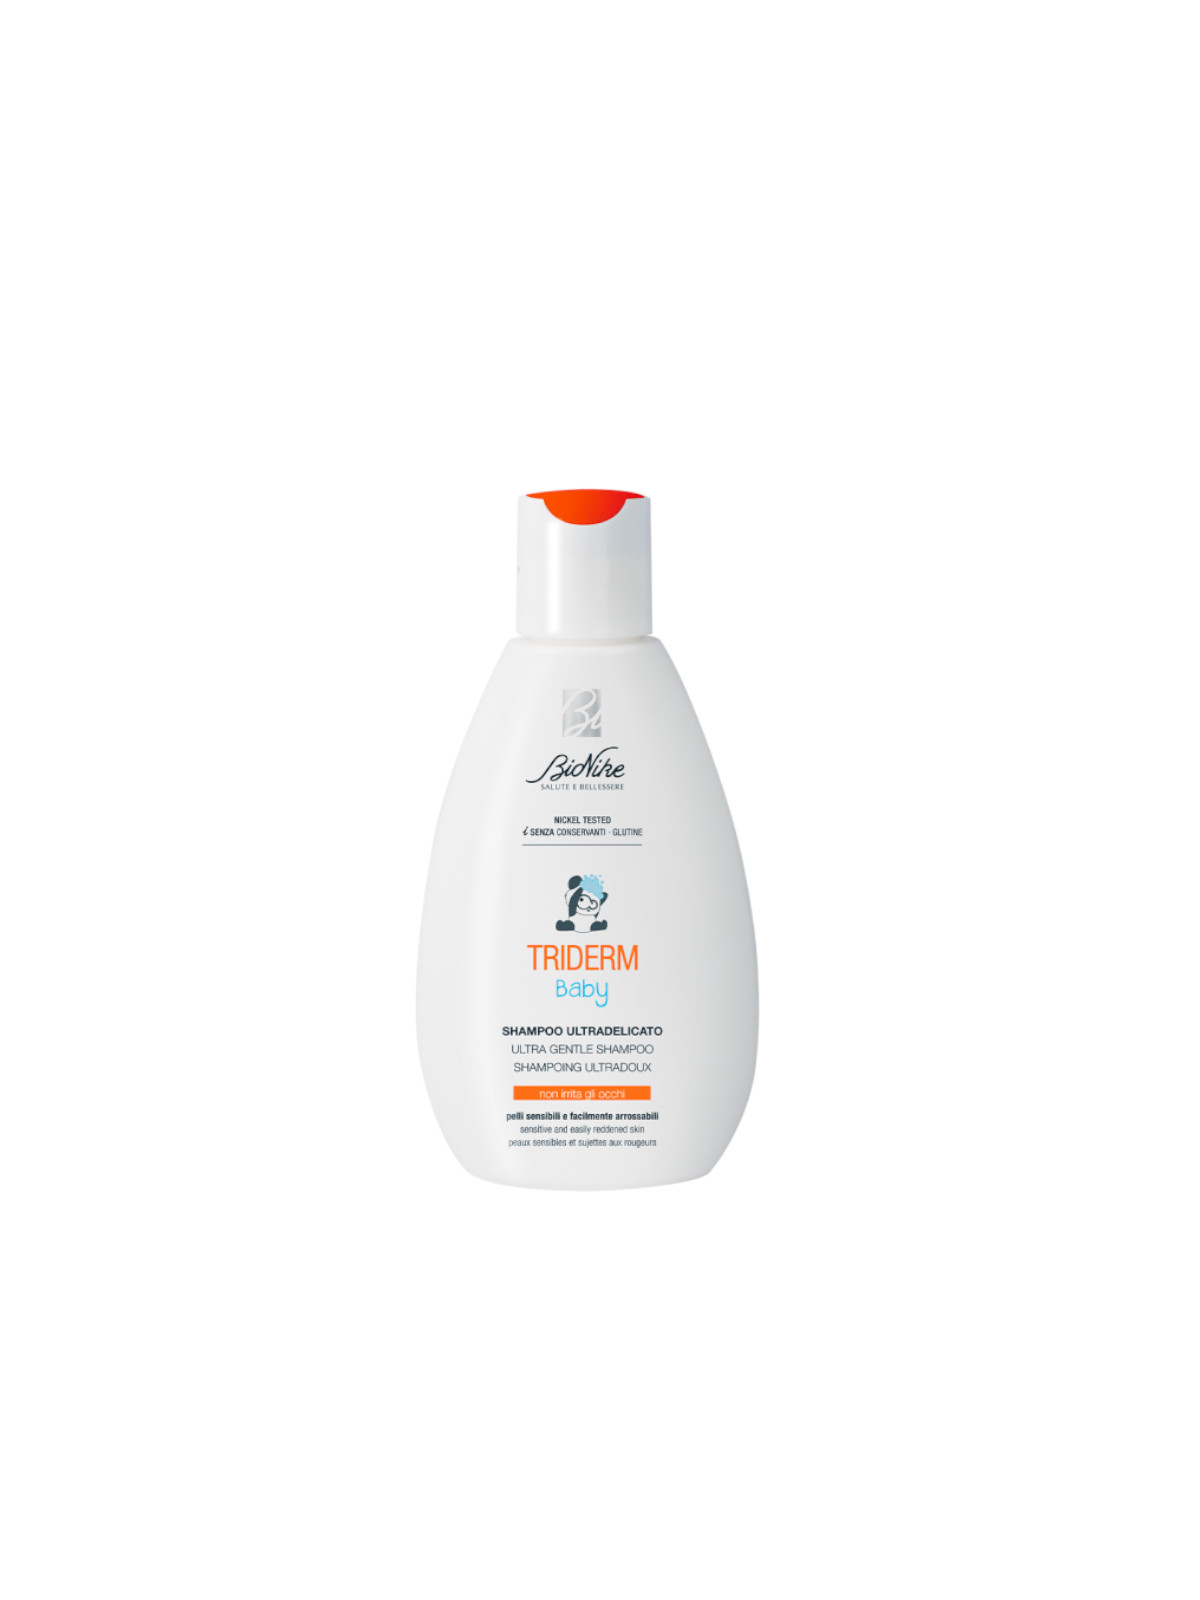 Triderm baby shampoo ultradelicato 200 ml - Bionike